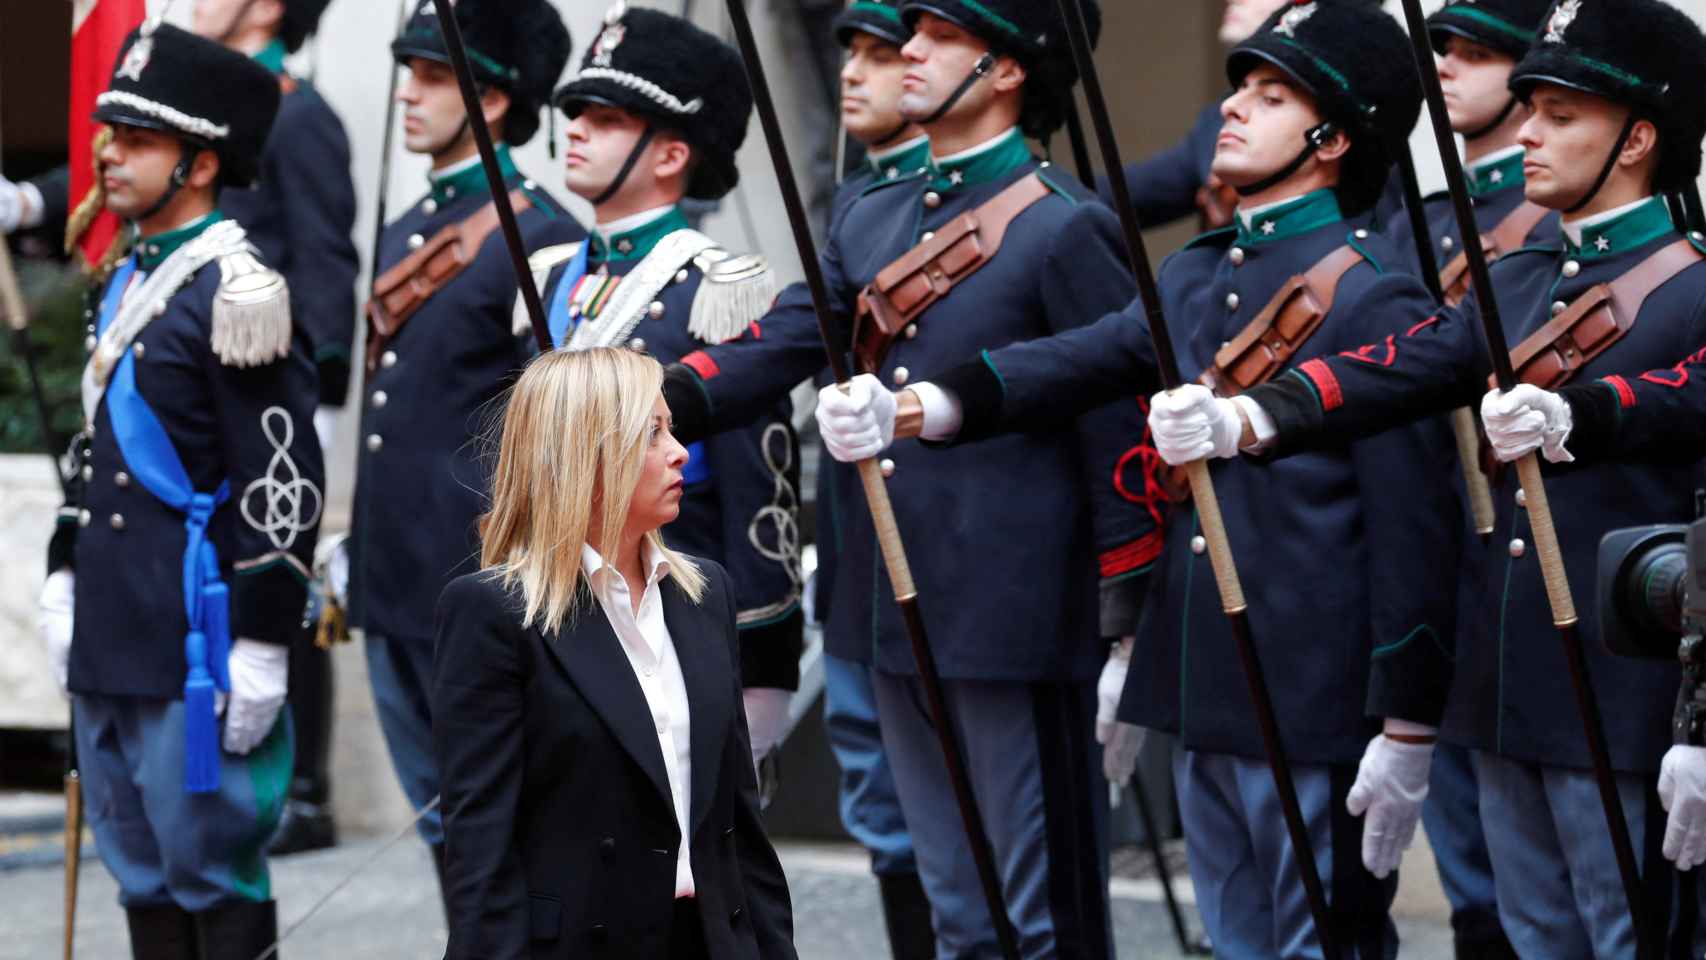 La primera ministra italiana, Giorgia Meloni, recibida con honores en su llegada al Palacio Chigi este domingo.